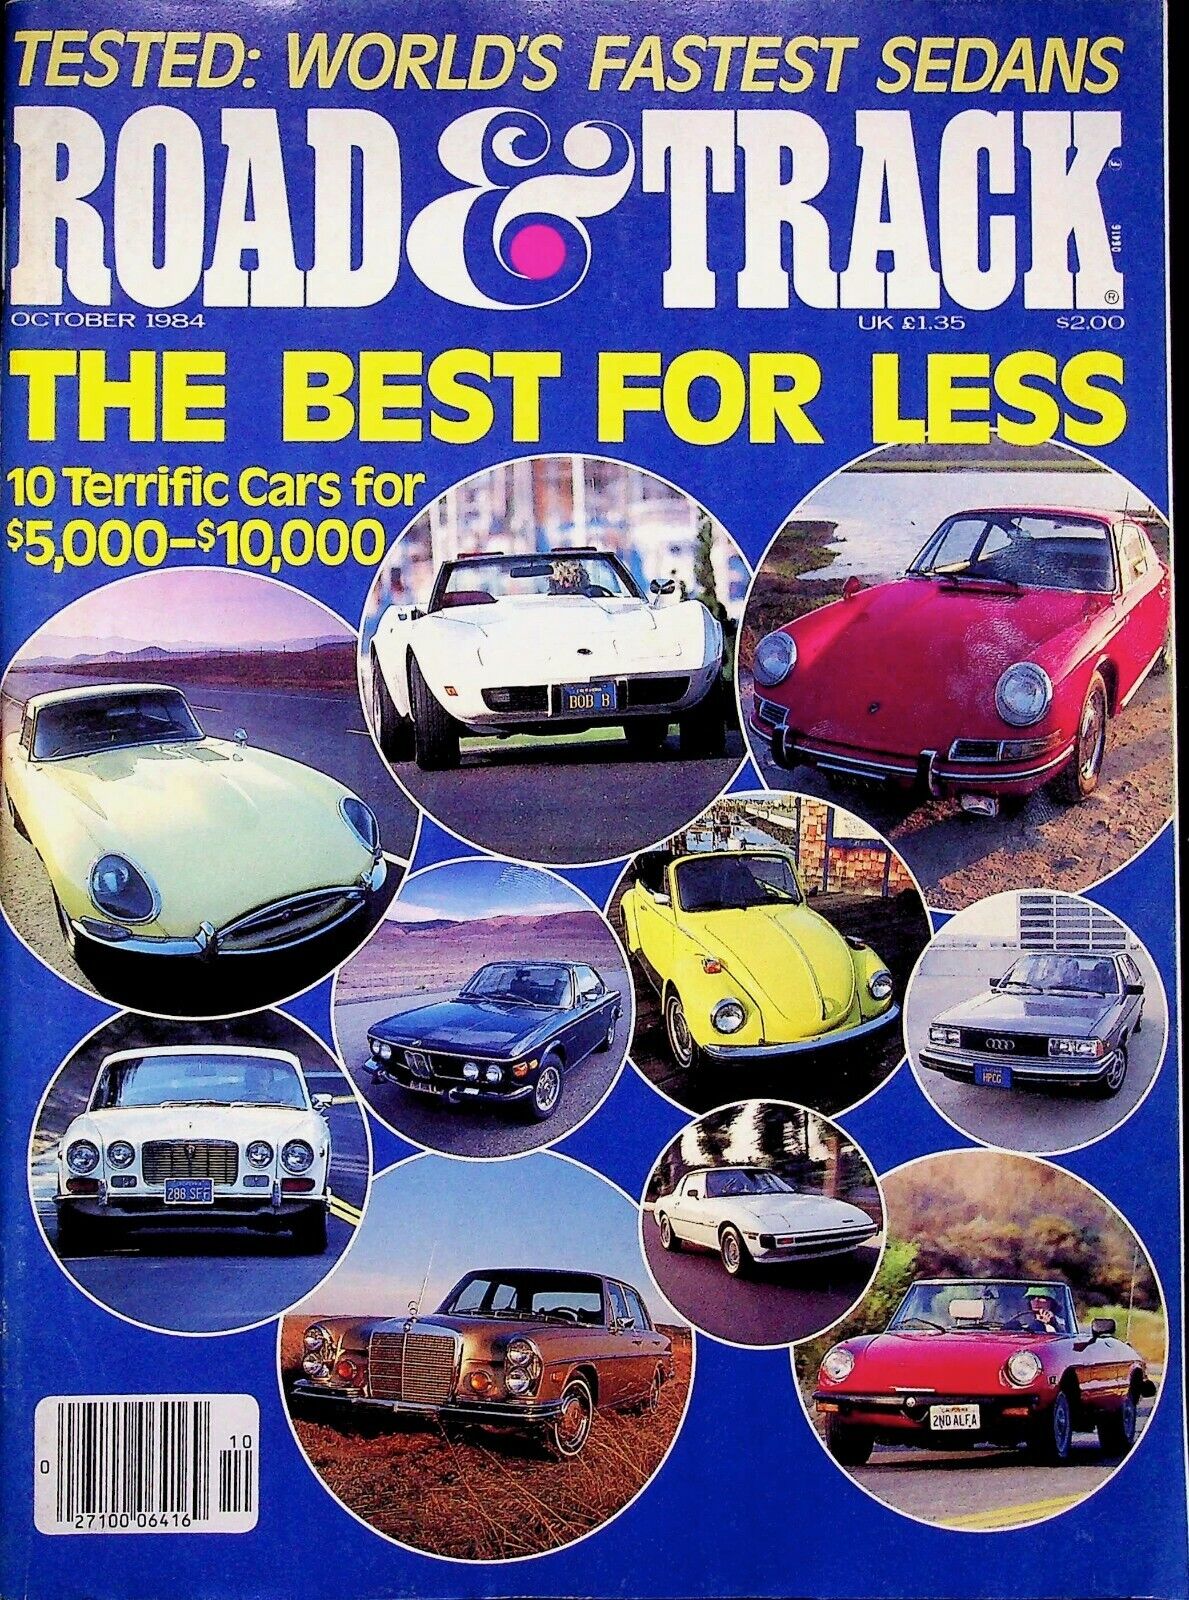 THE BEST FOR LESS - ROAD & TRACK MAGAZINE, OCTOBER 1984 VOLUME 36, #2 VINTAGE 